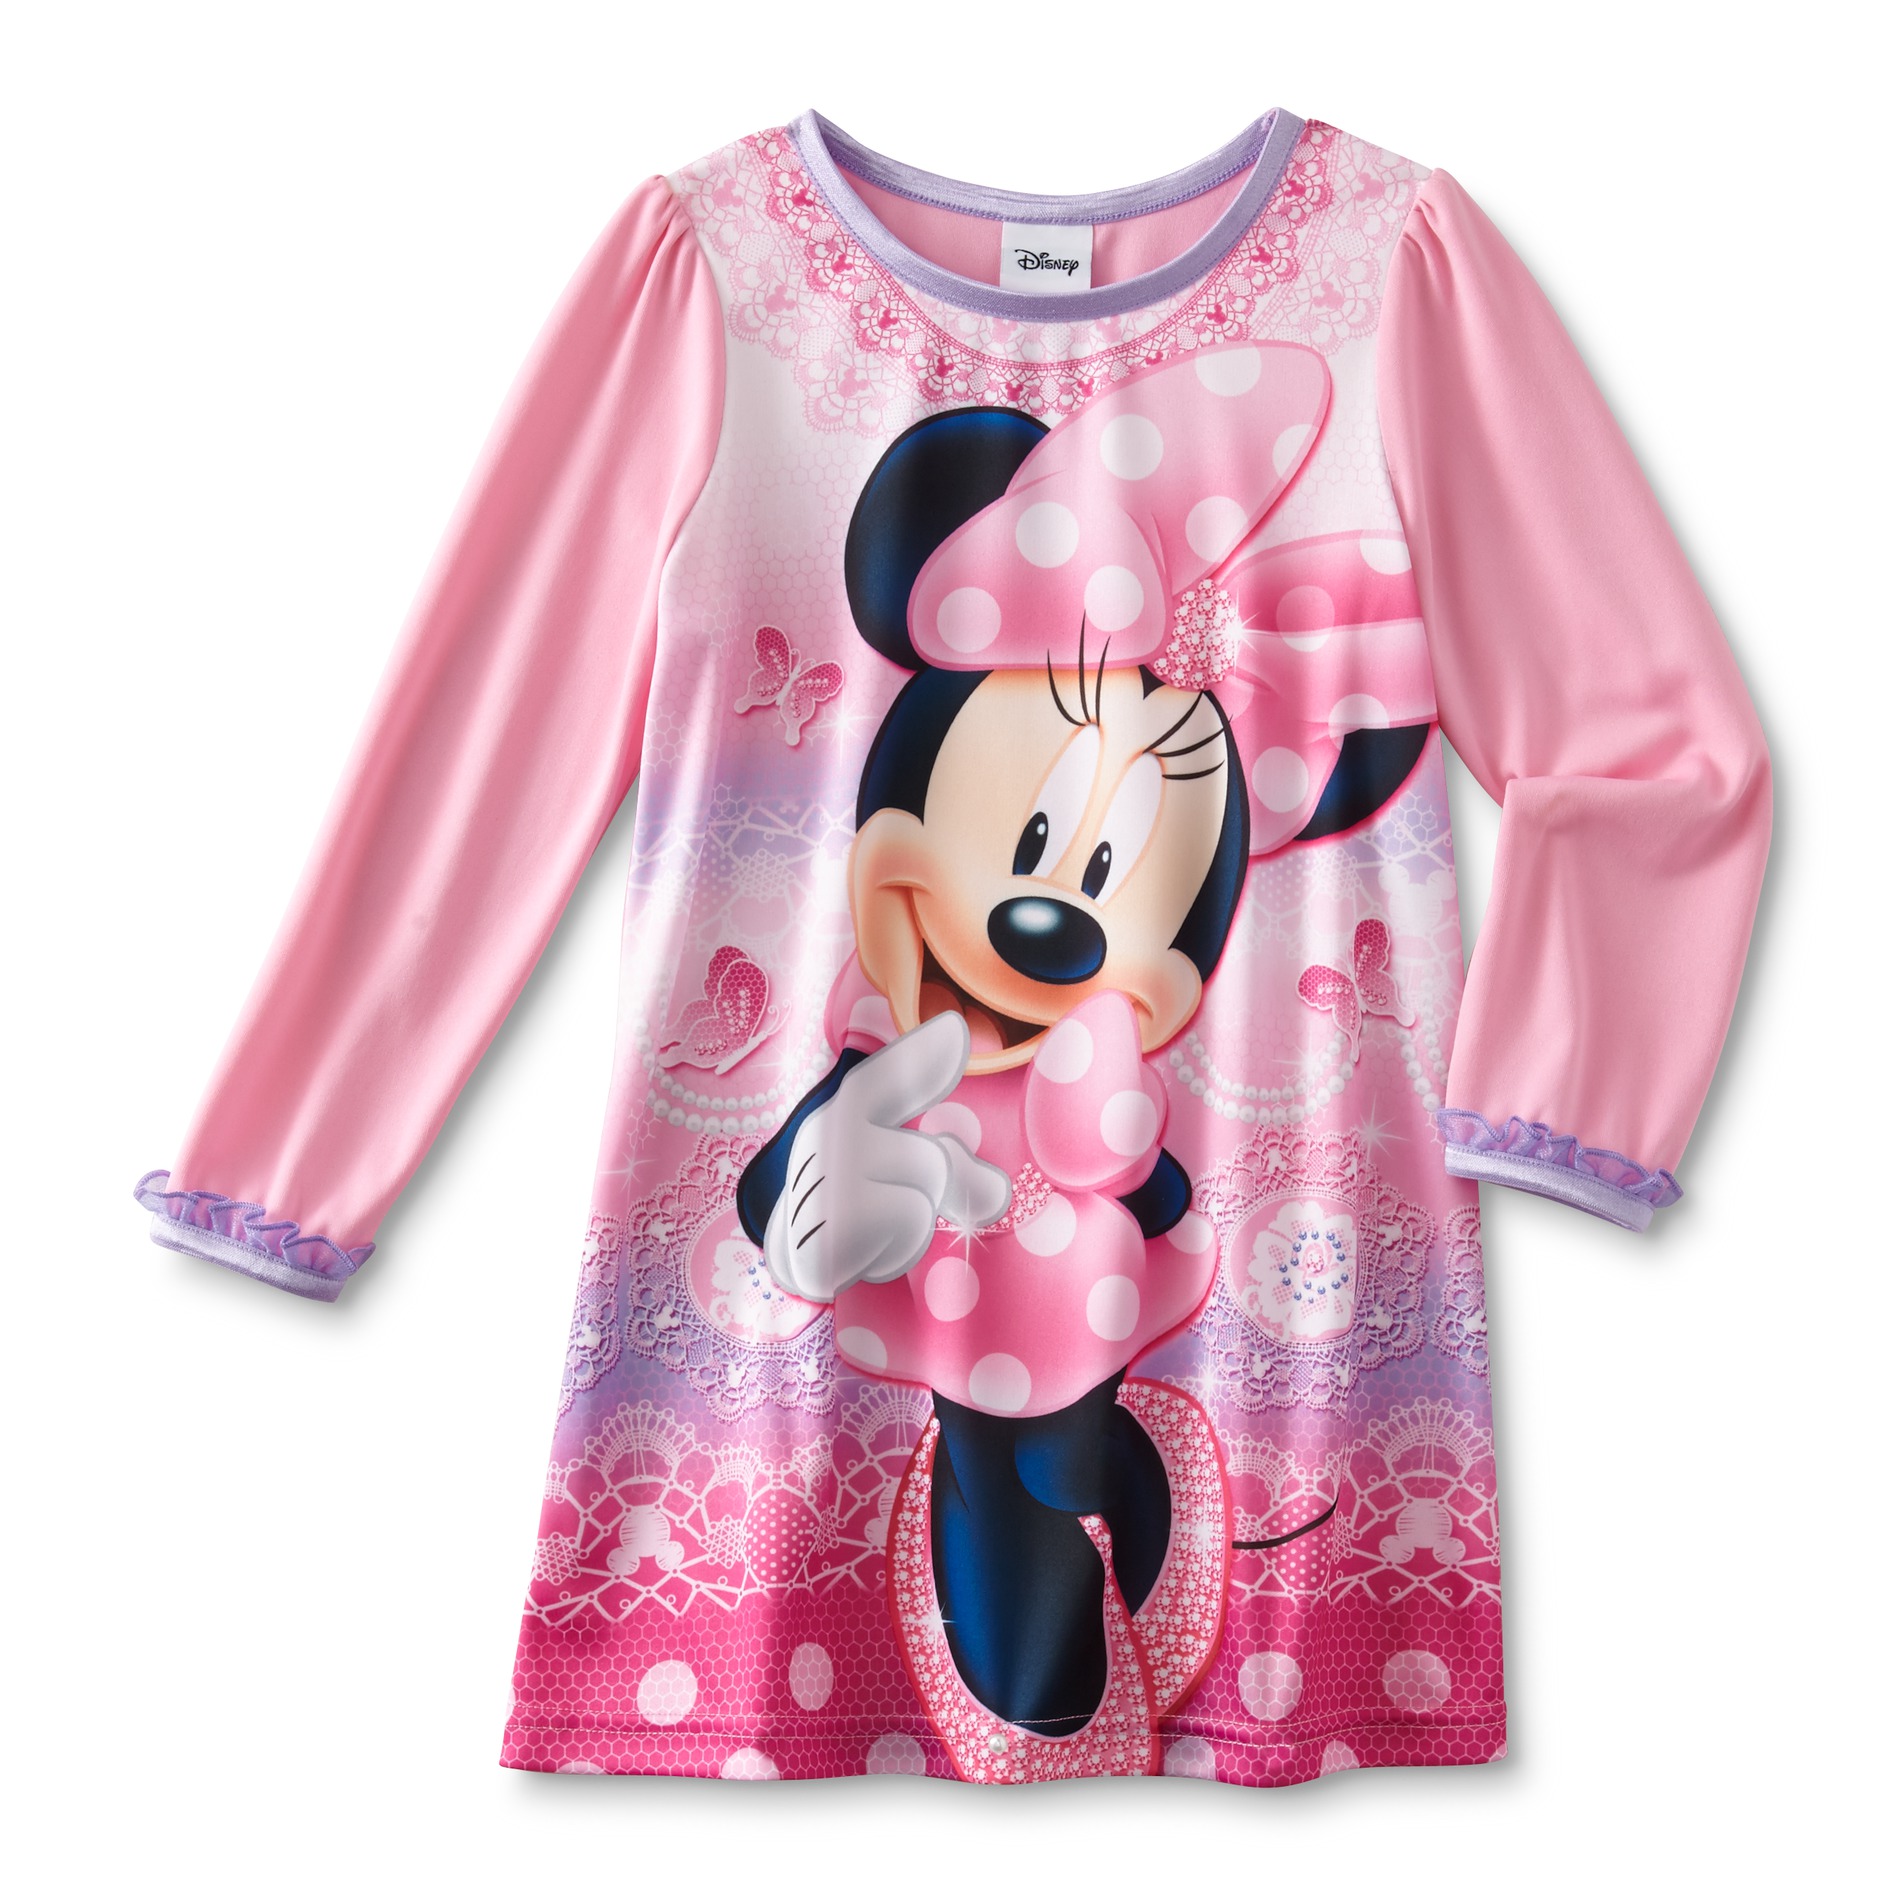 Disney Minnie Mouse Toddler Girl's Sleep Shirt